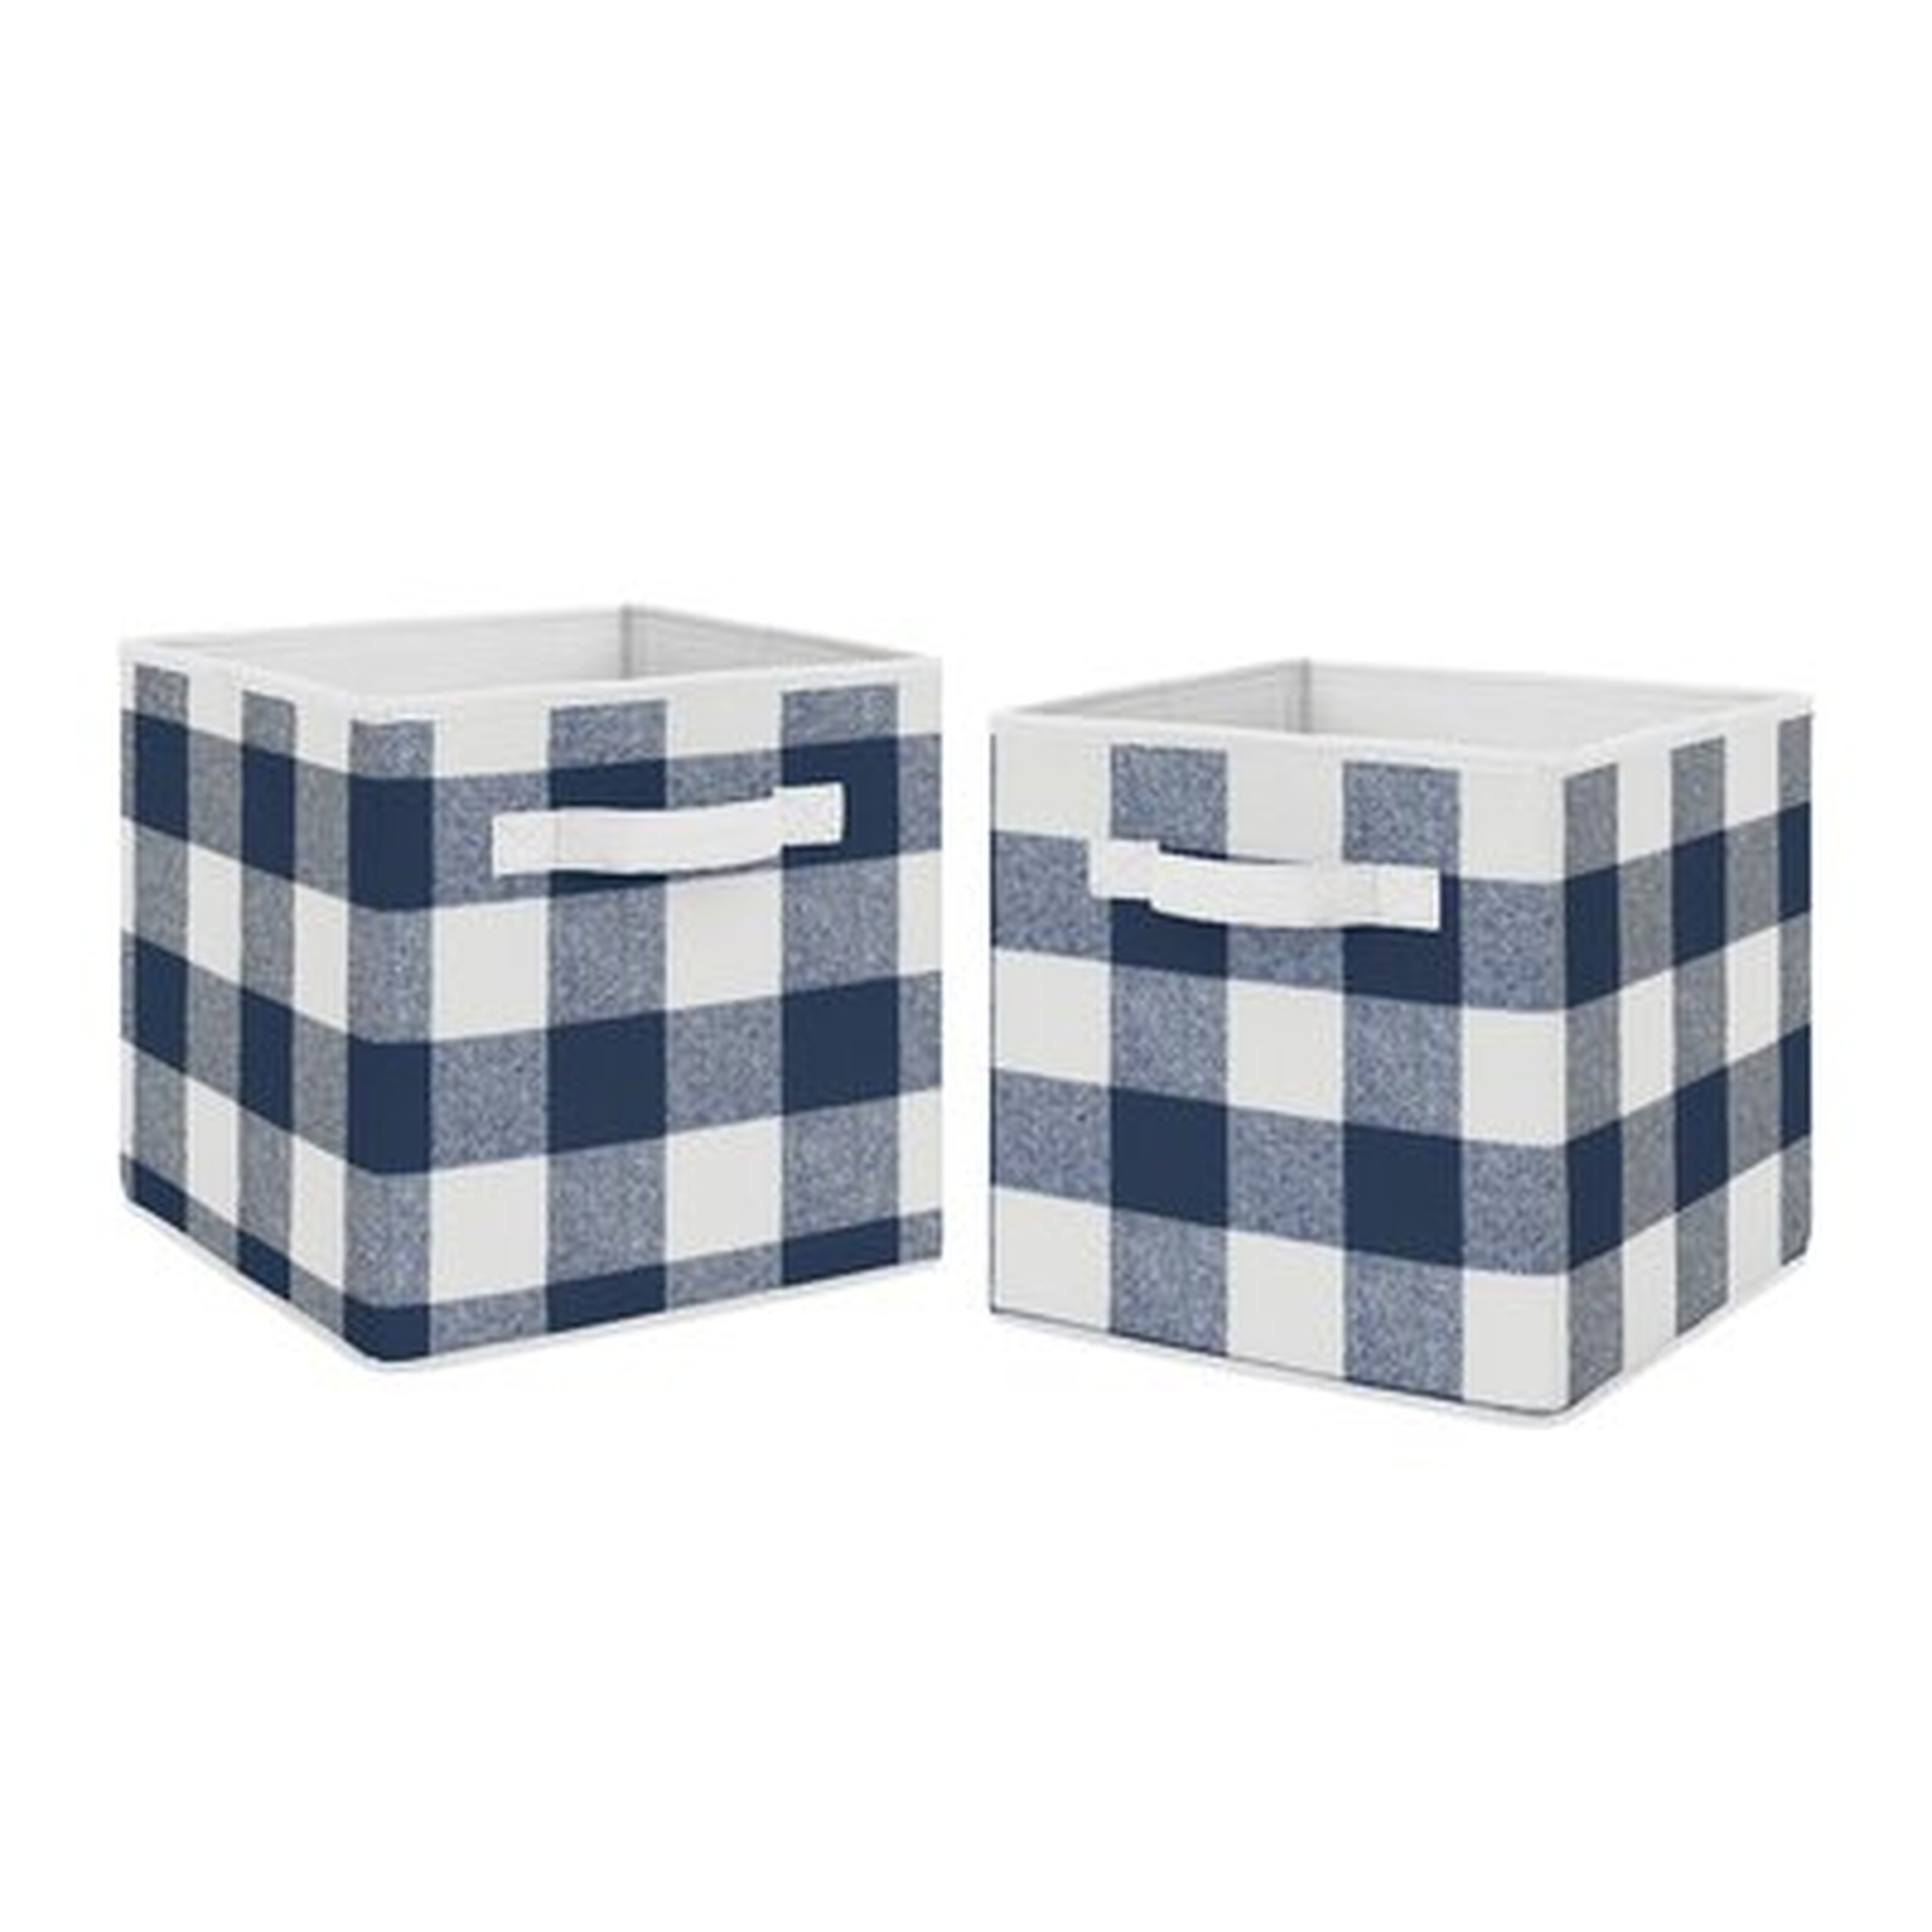 Buffalo Plaid Check Navy Blue And White Fabric Storage Bin (Set Of 2) By Sweet Jojo Designs - Wayfair